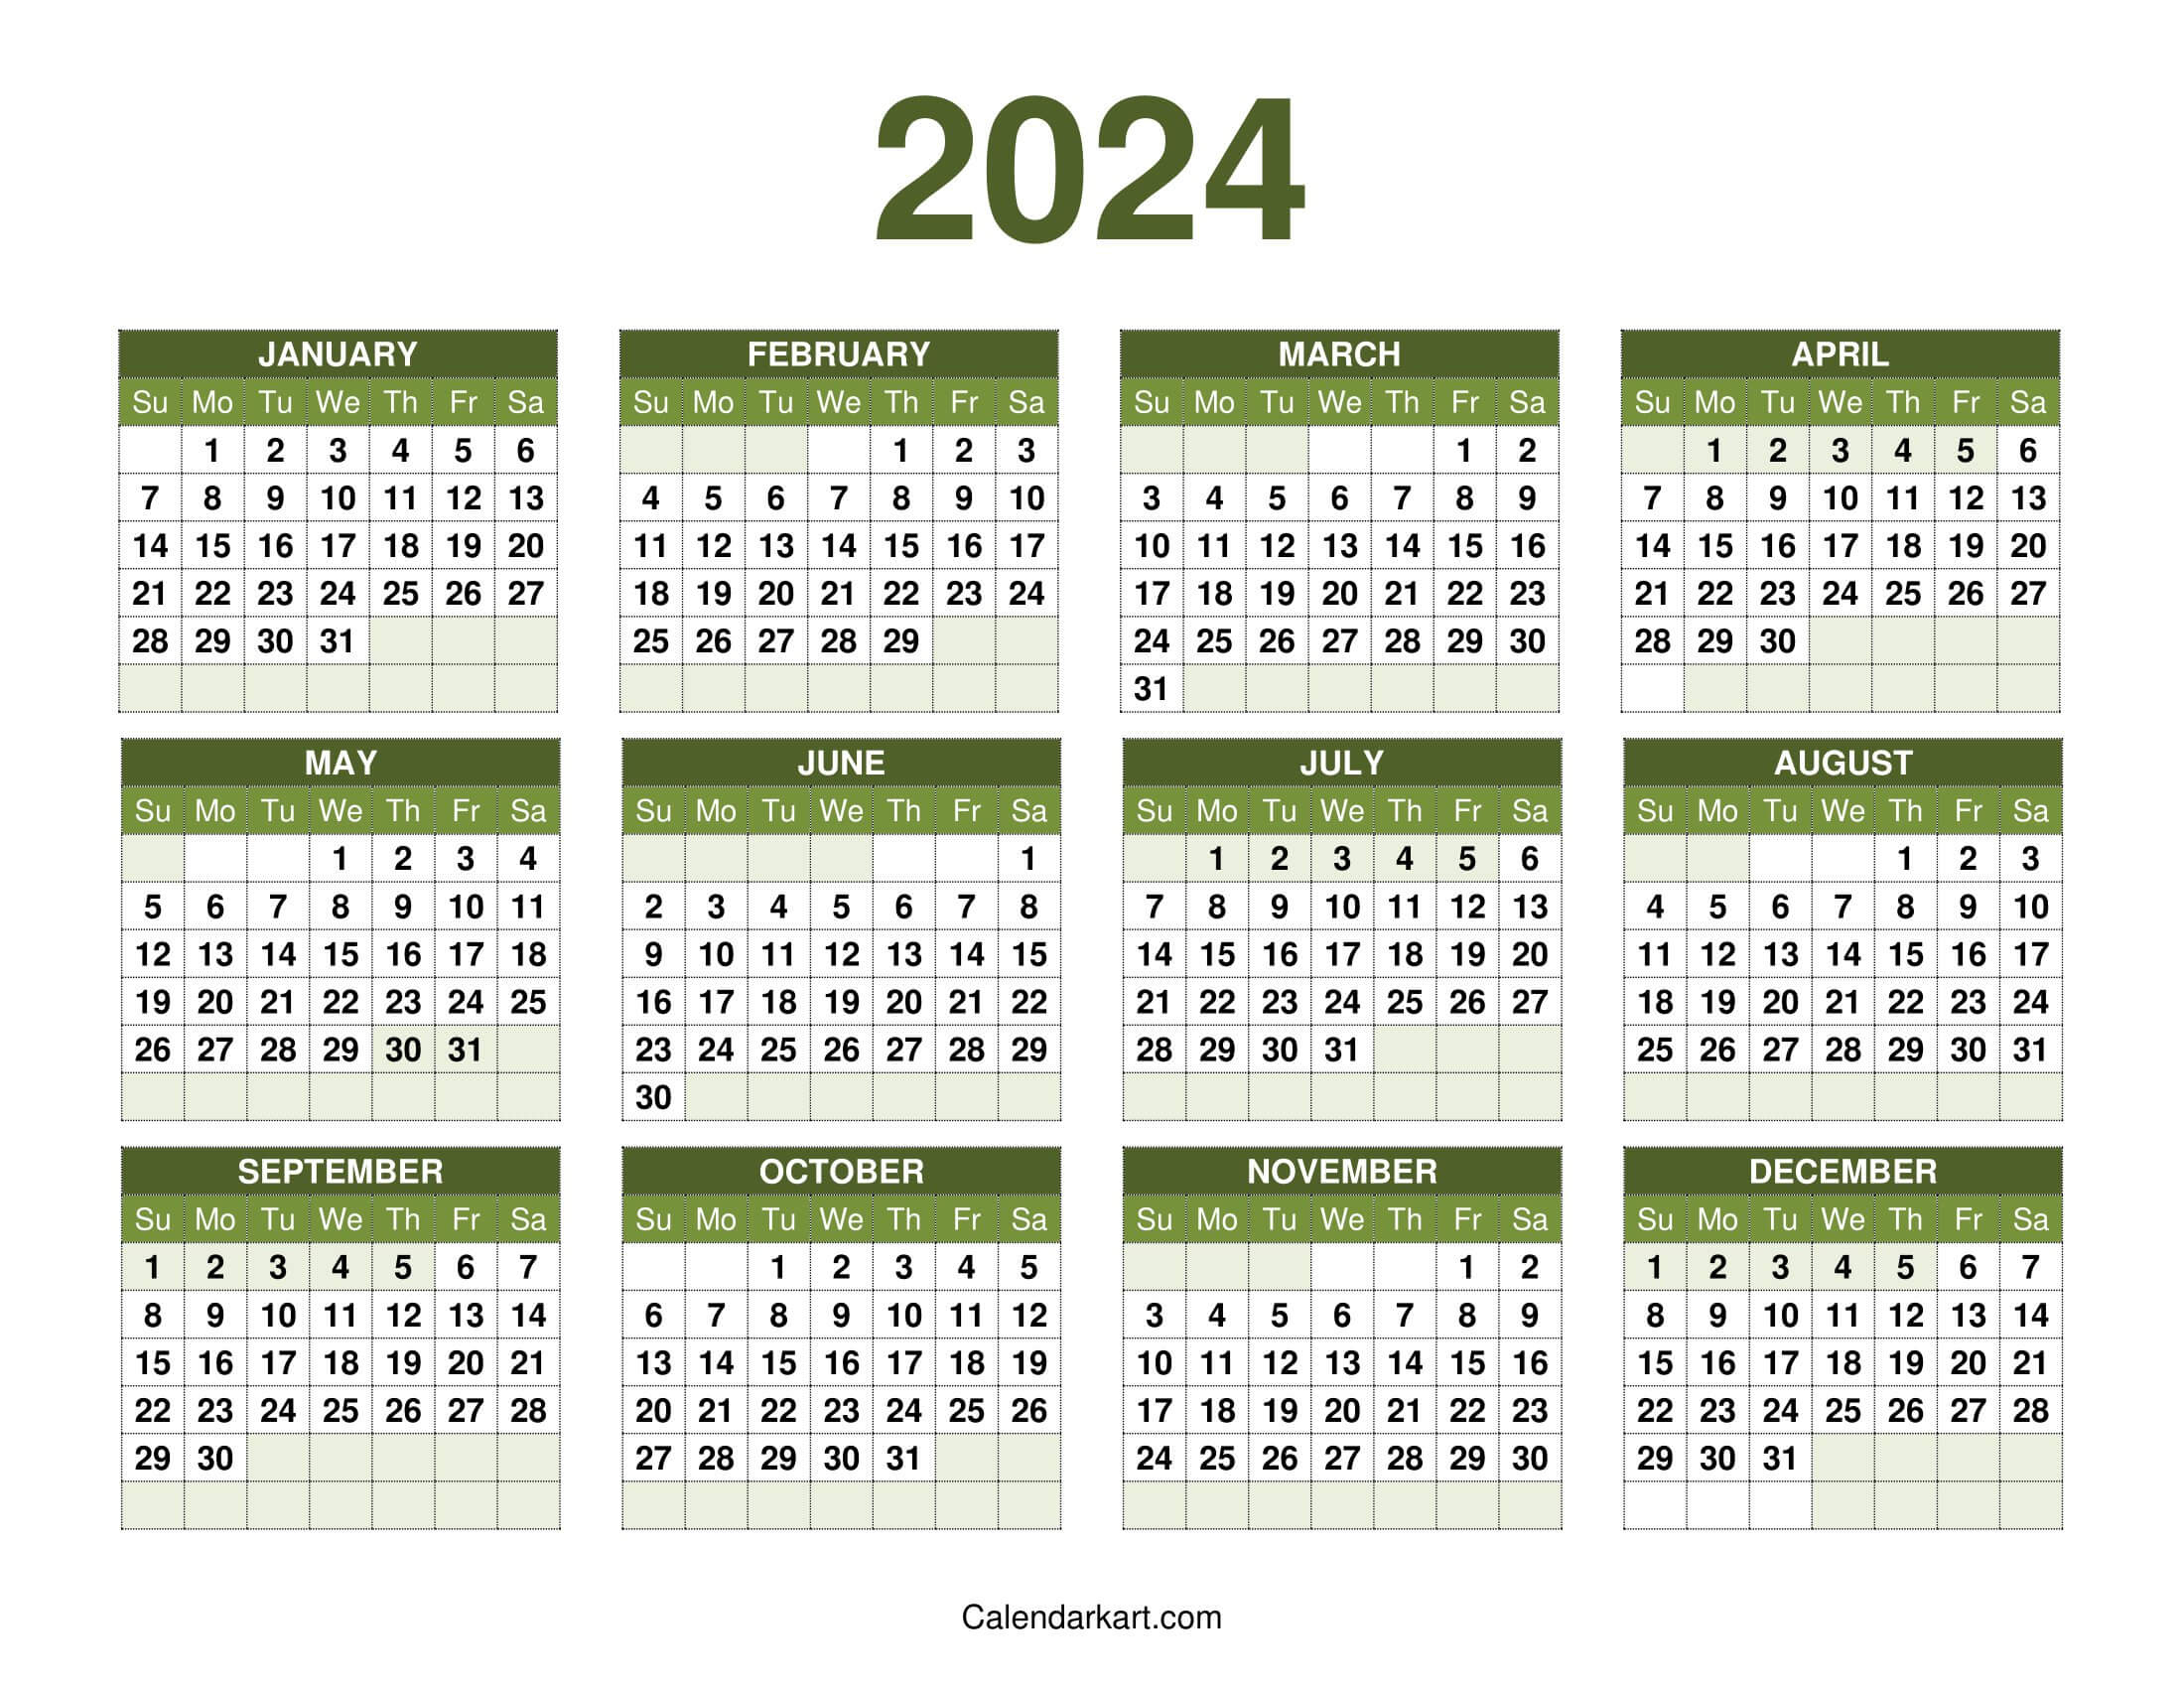 Free Printable Year At A Glance Calendar 2023-2024 - Calendarkart | 2024 Yearly Calendar